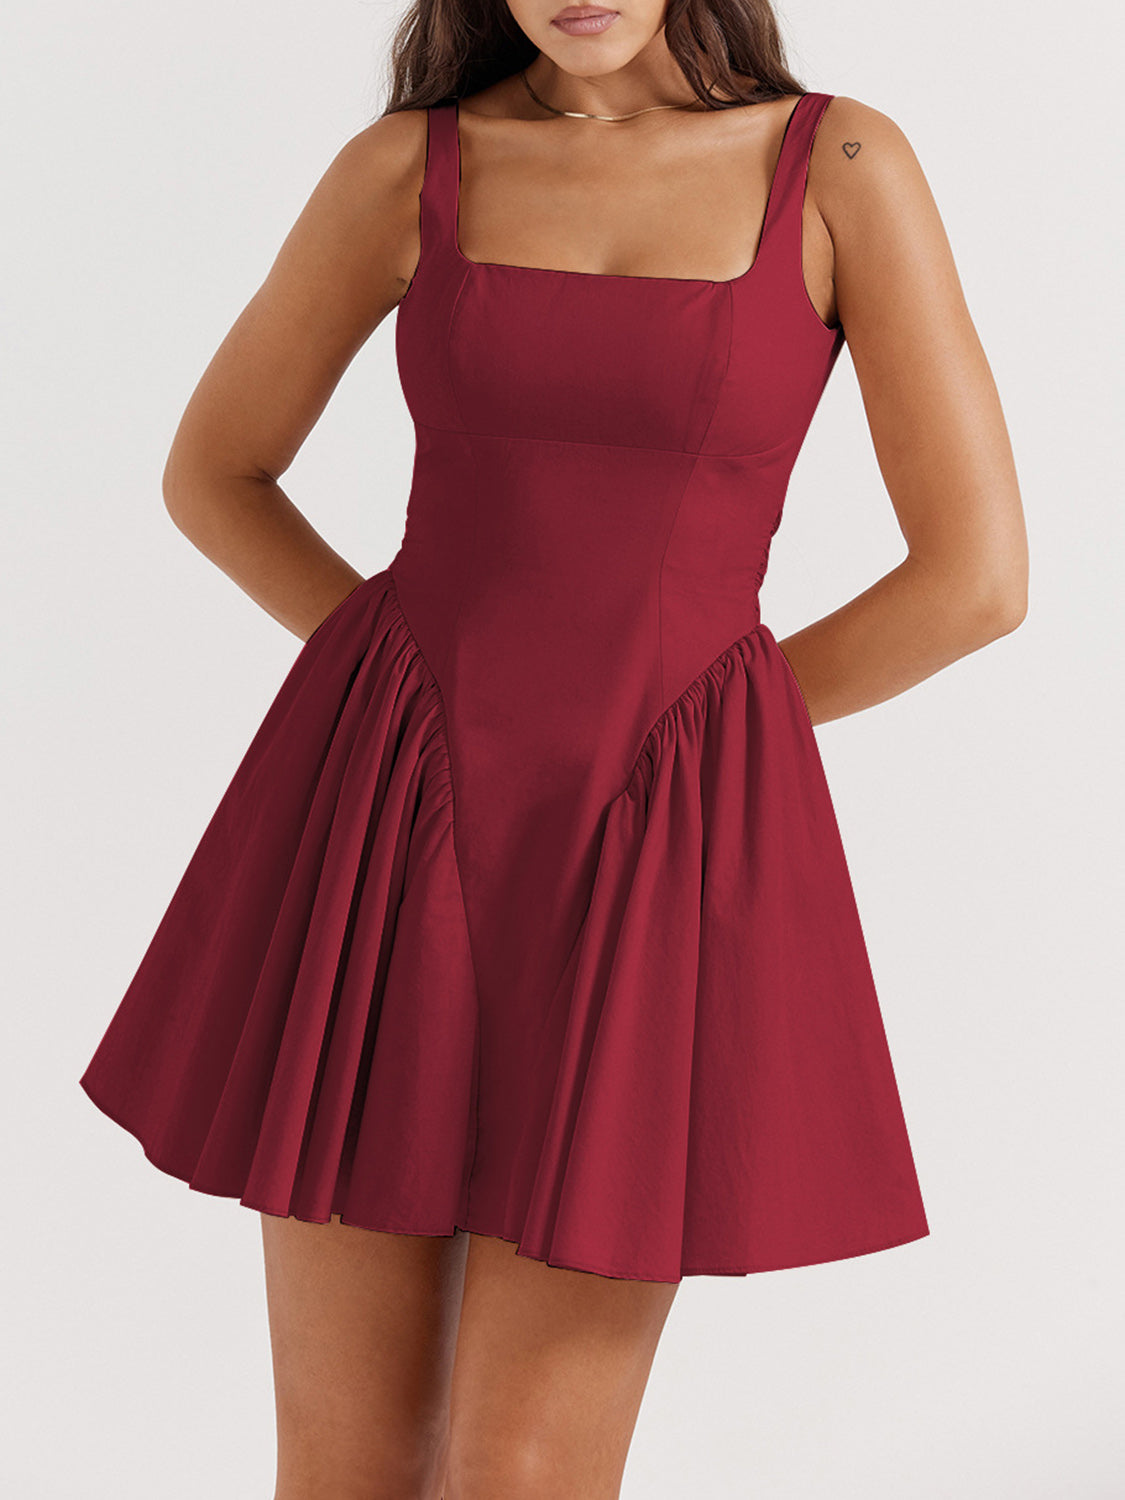 Backless Bow Detail Square Neck Mini Dress (4 Colors)